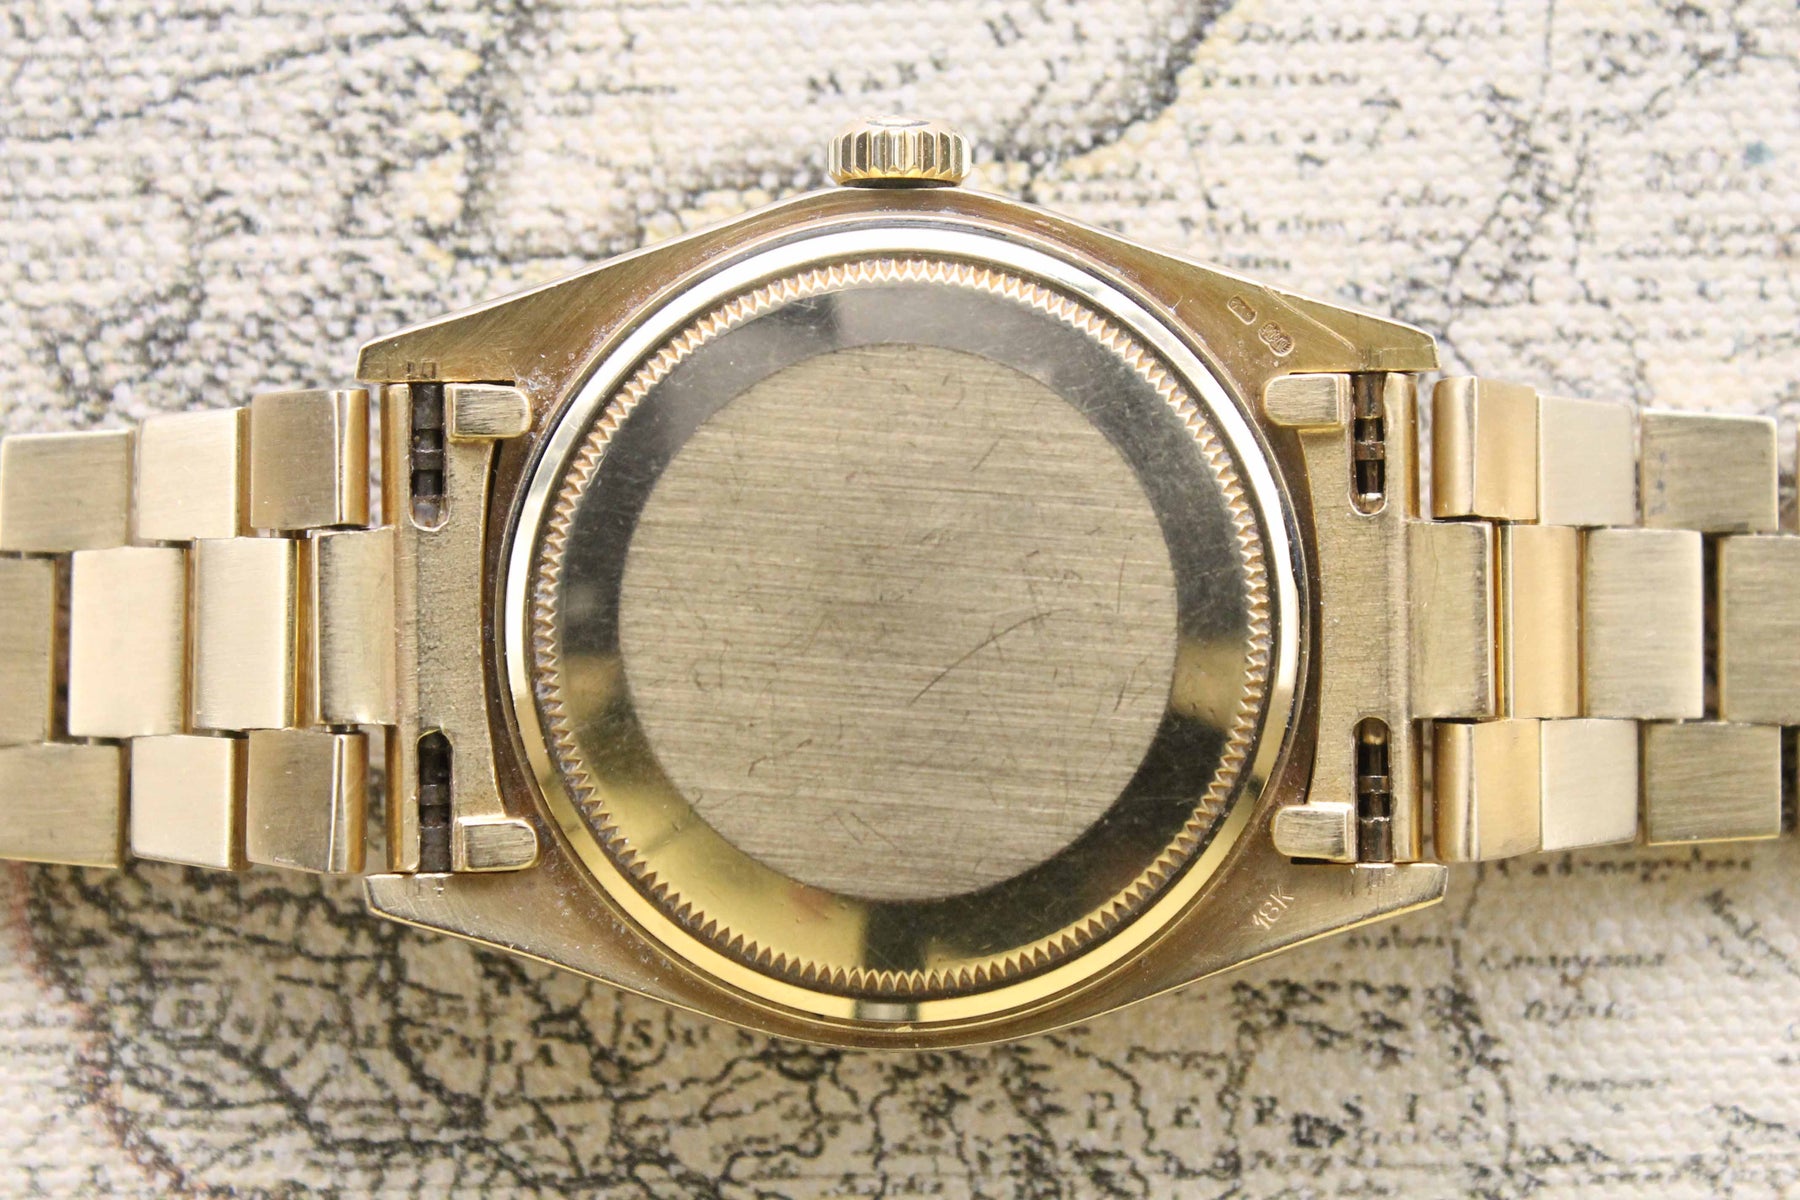 1980 Rolex Day Date Aventurine Pinball Dial Ref. 18038